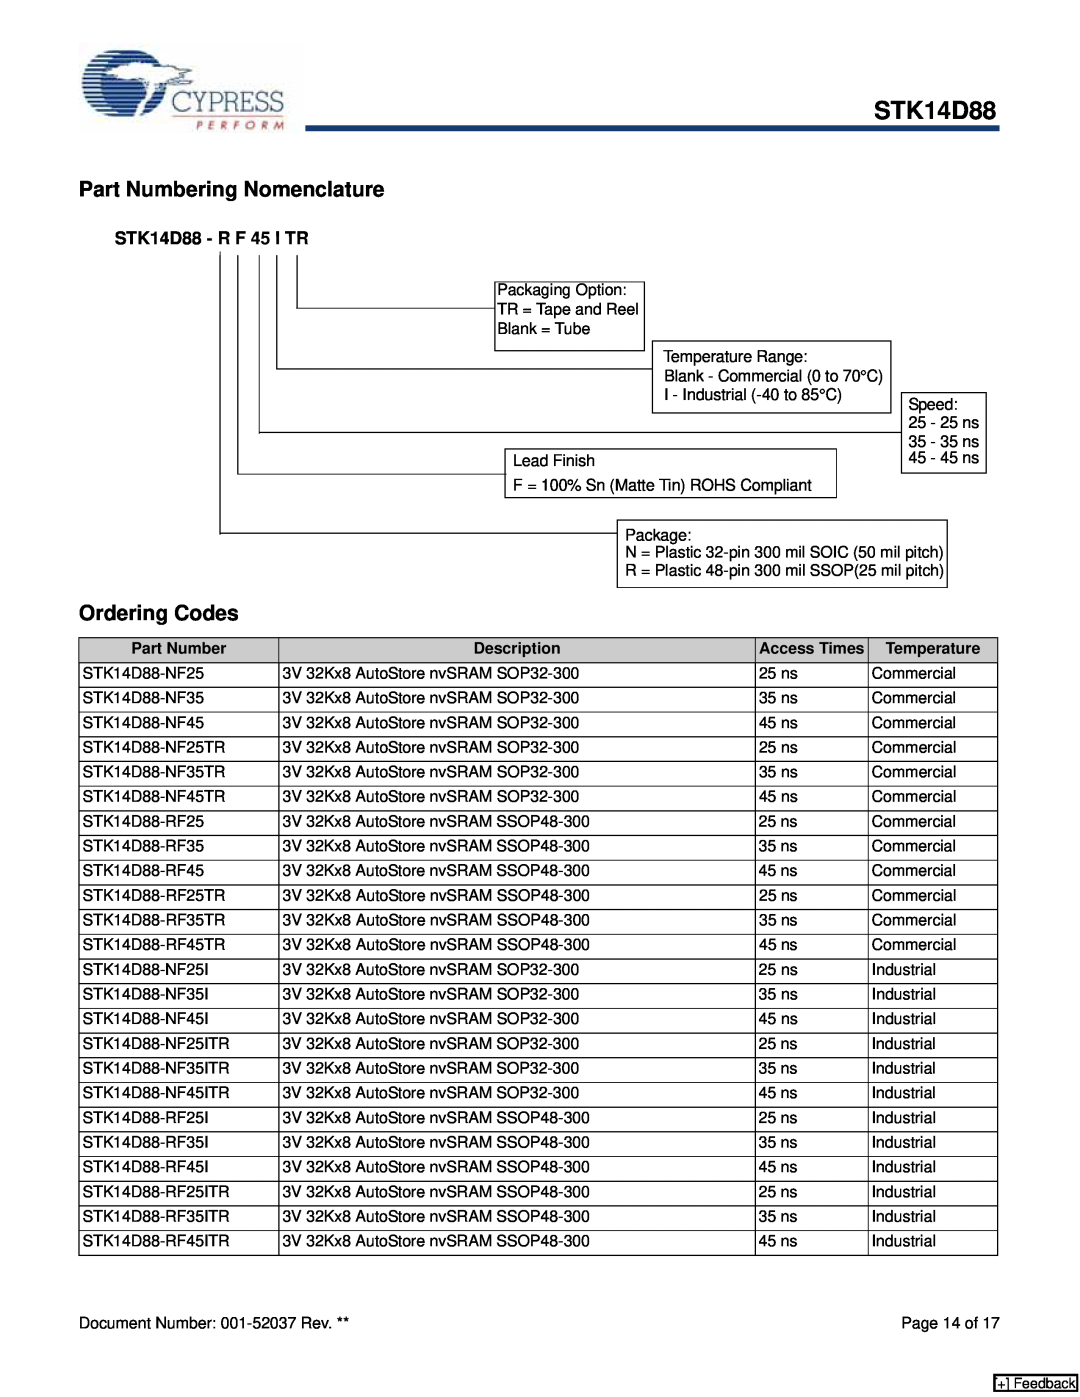 Cypress manual Part Numbering Nomenclature, Ordering Codes, STK14D88 - R F 45 I TR 